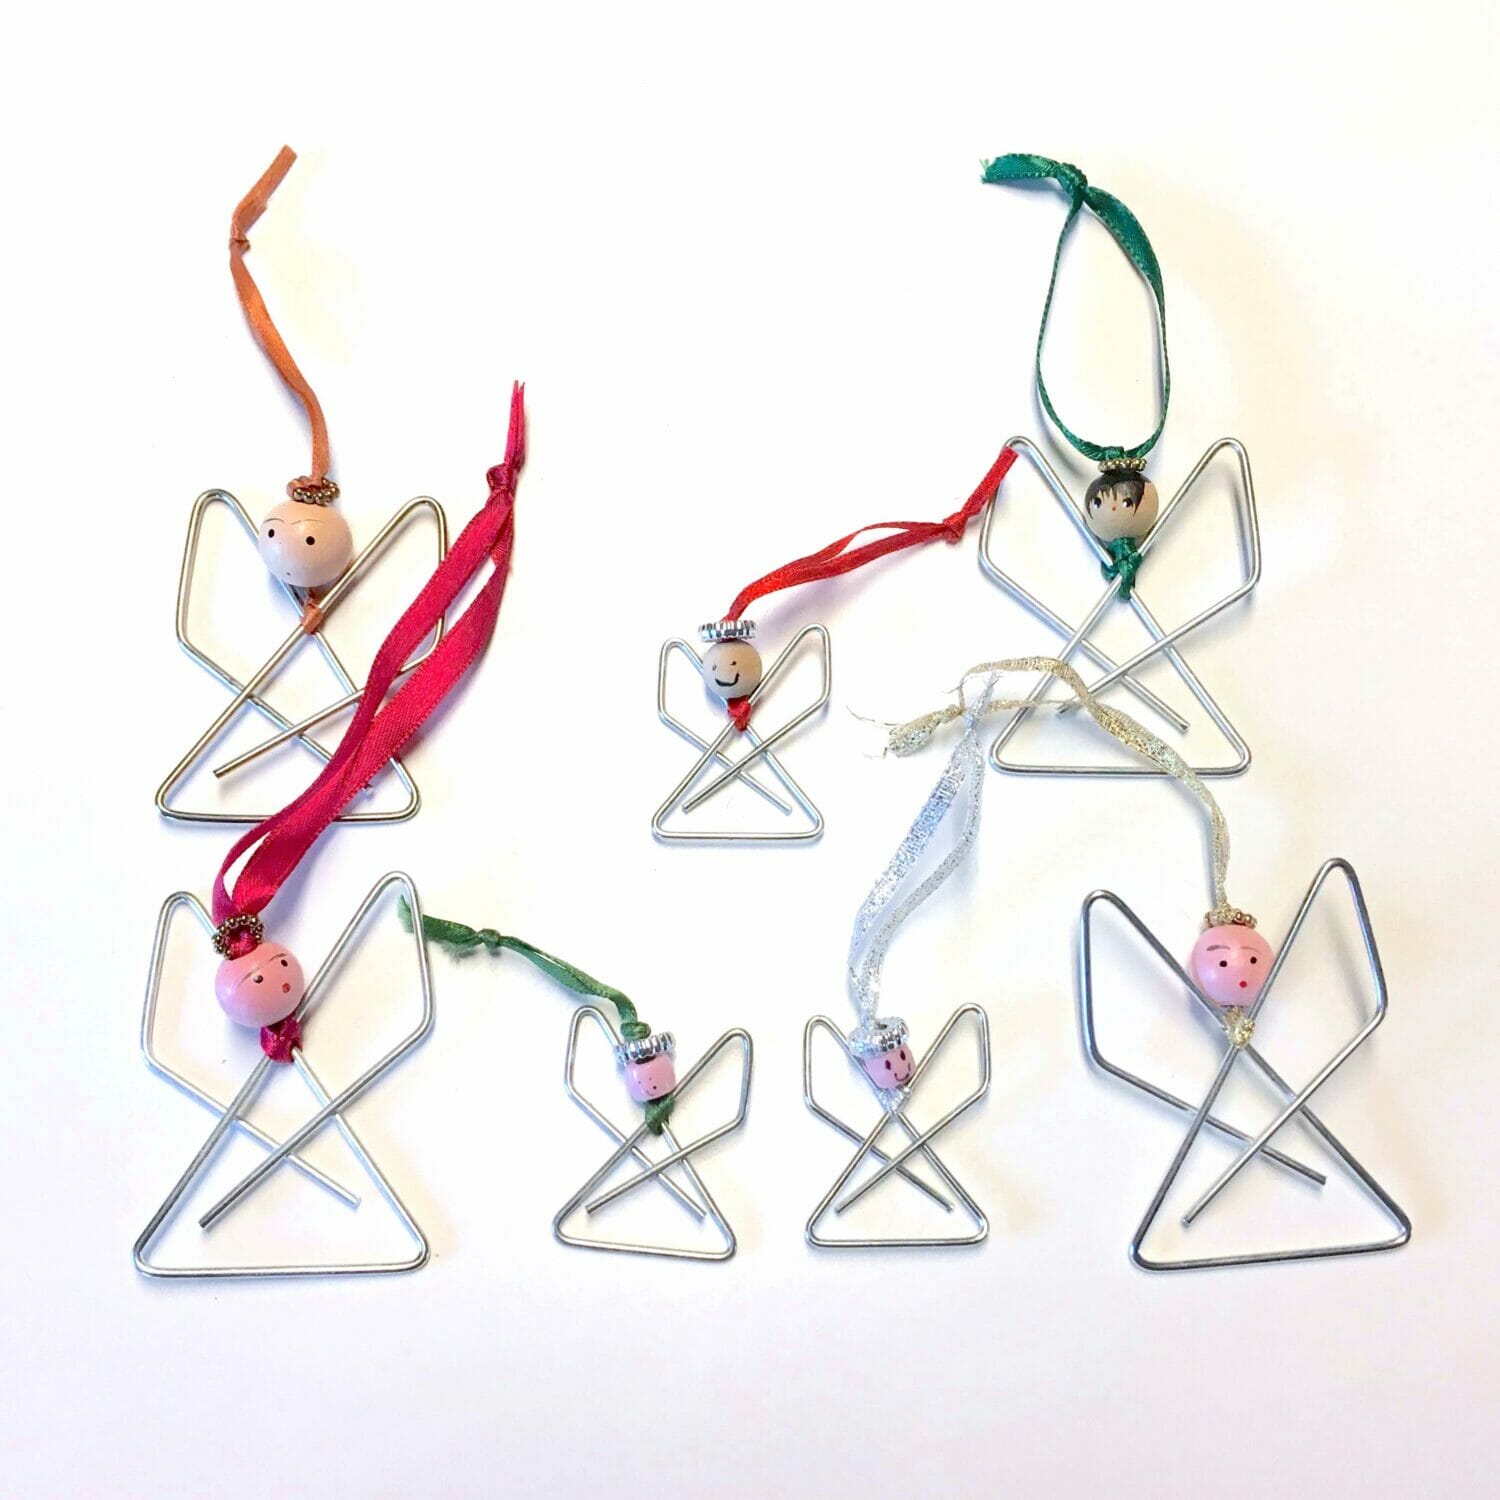 Handmade Christmas - Paper Angels Tutorial